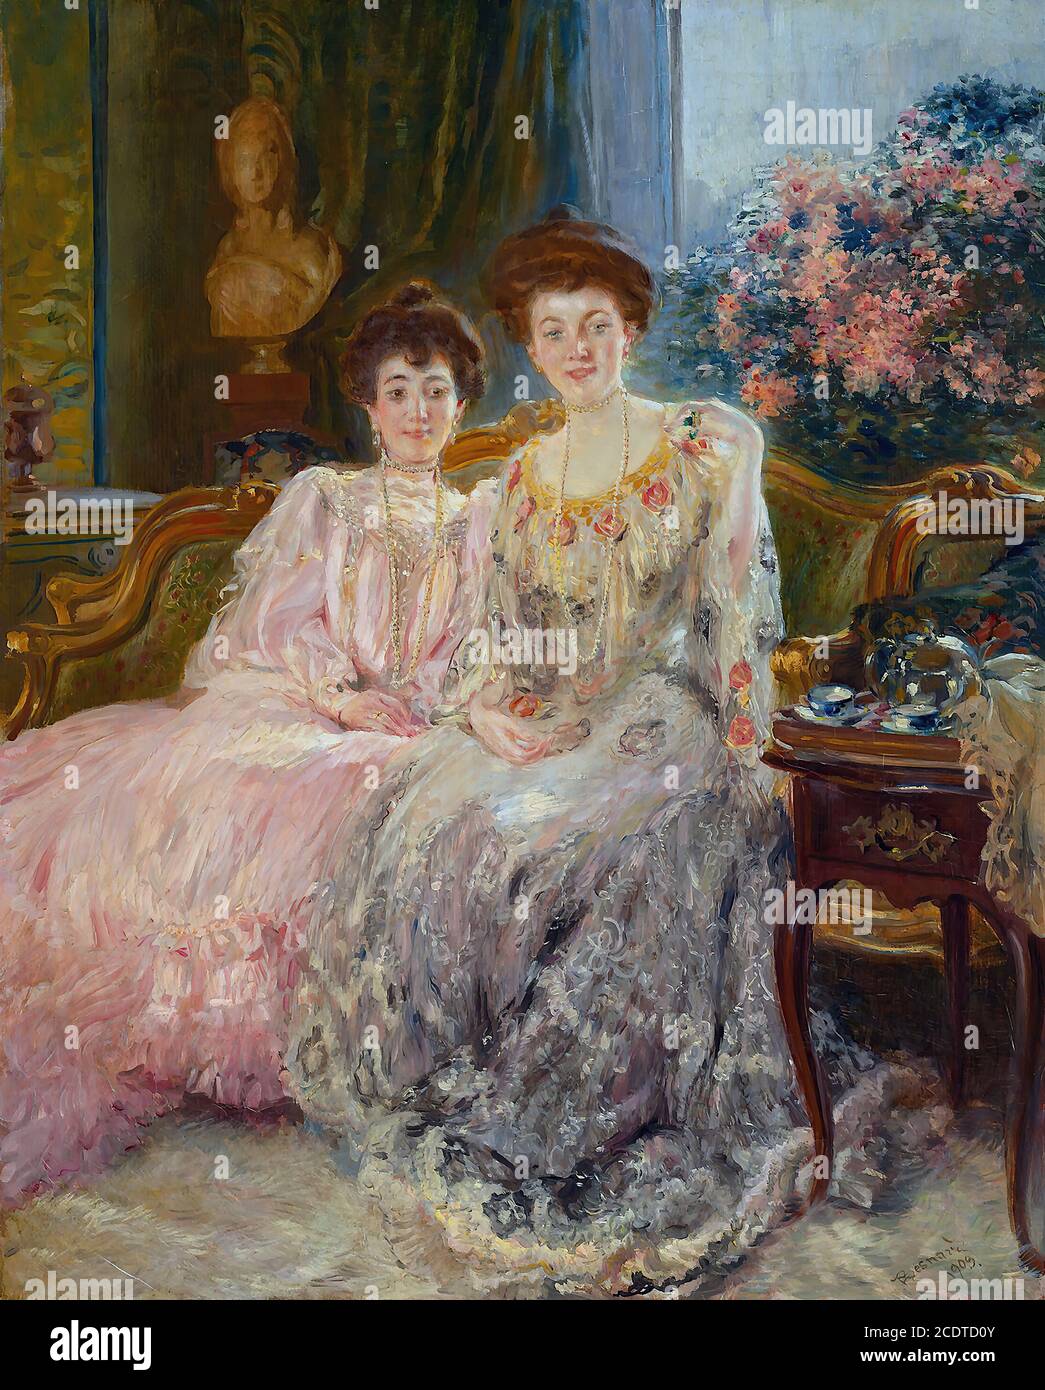 Besnard  Albert - Portrait of the Kharitonenko Sisters (Princess Elena Urusova and Countess Natalia Stenbock-Fermor) - French School - 19th  Century Stock Photo